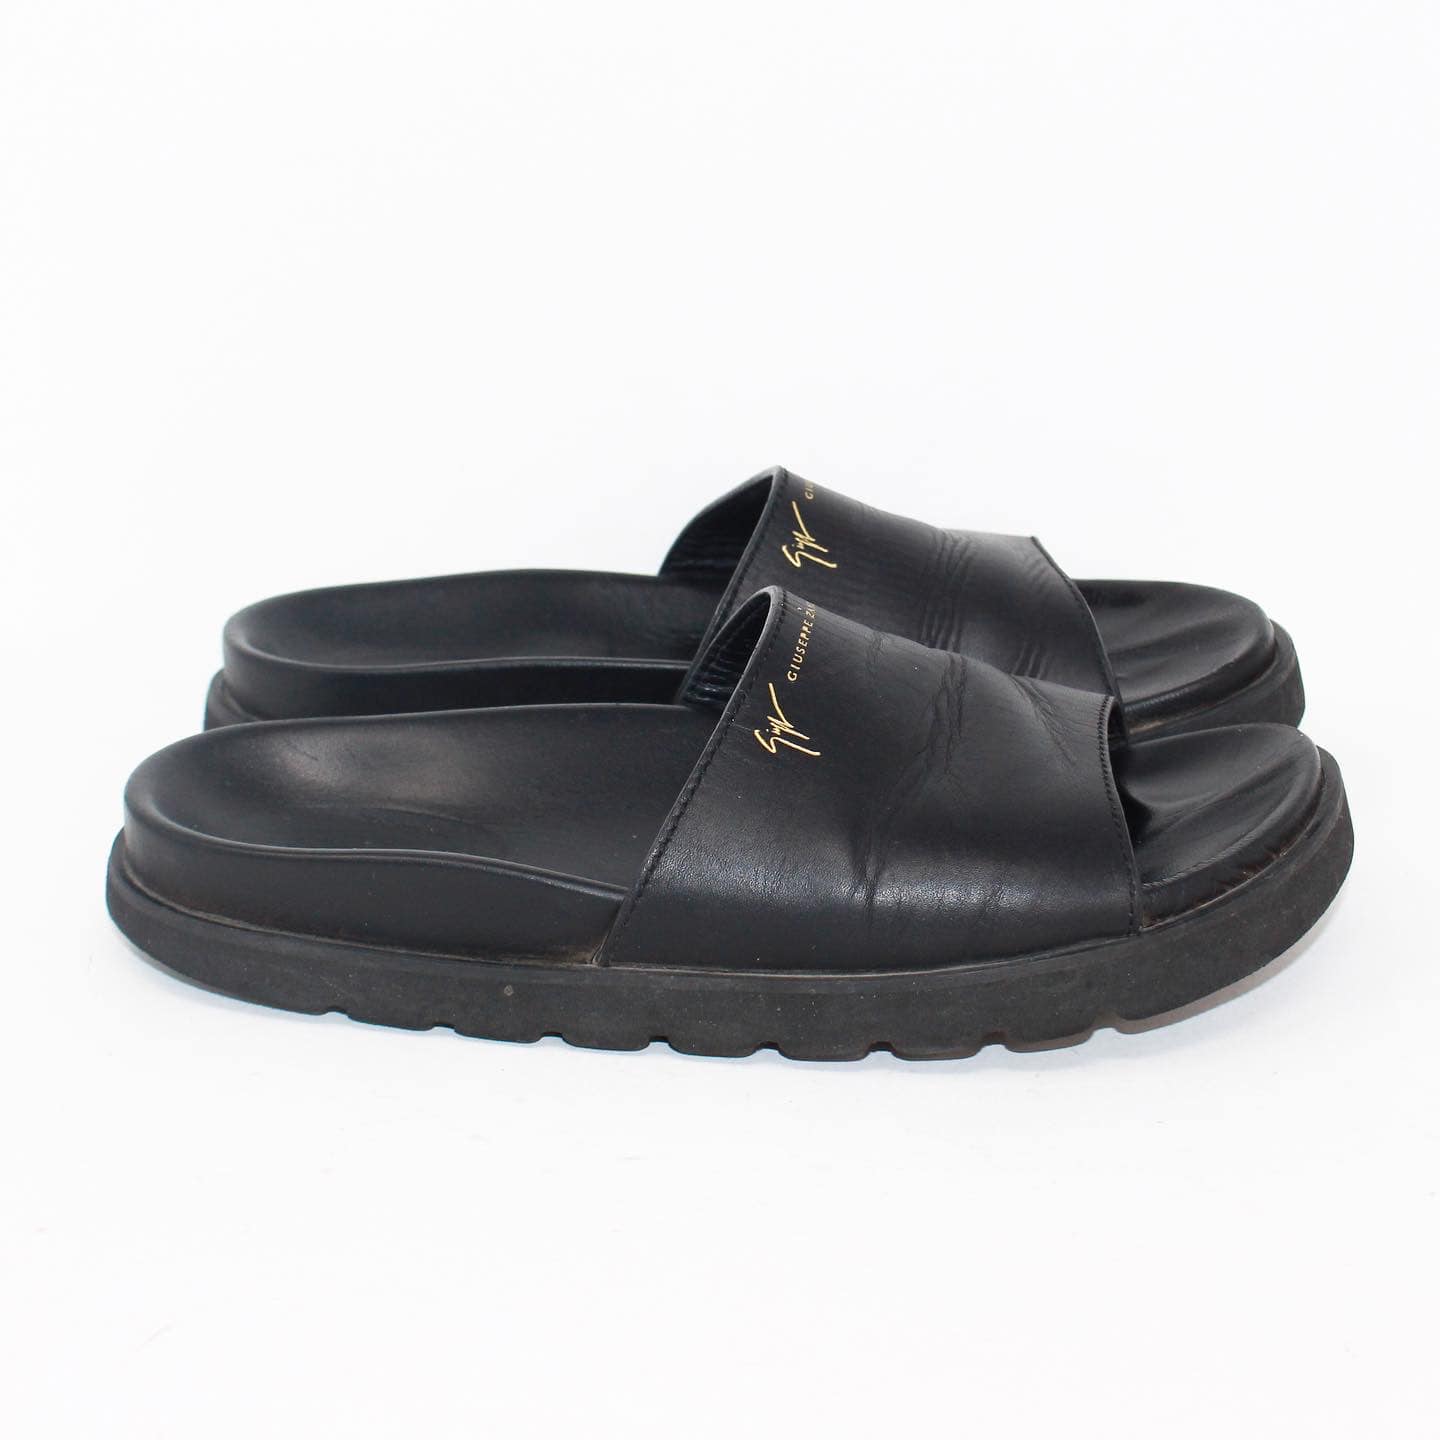 GIUSEPPE ZANOTTI # Black Leather Sandals US 7 EU